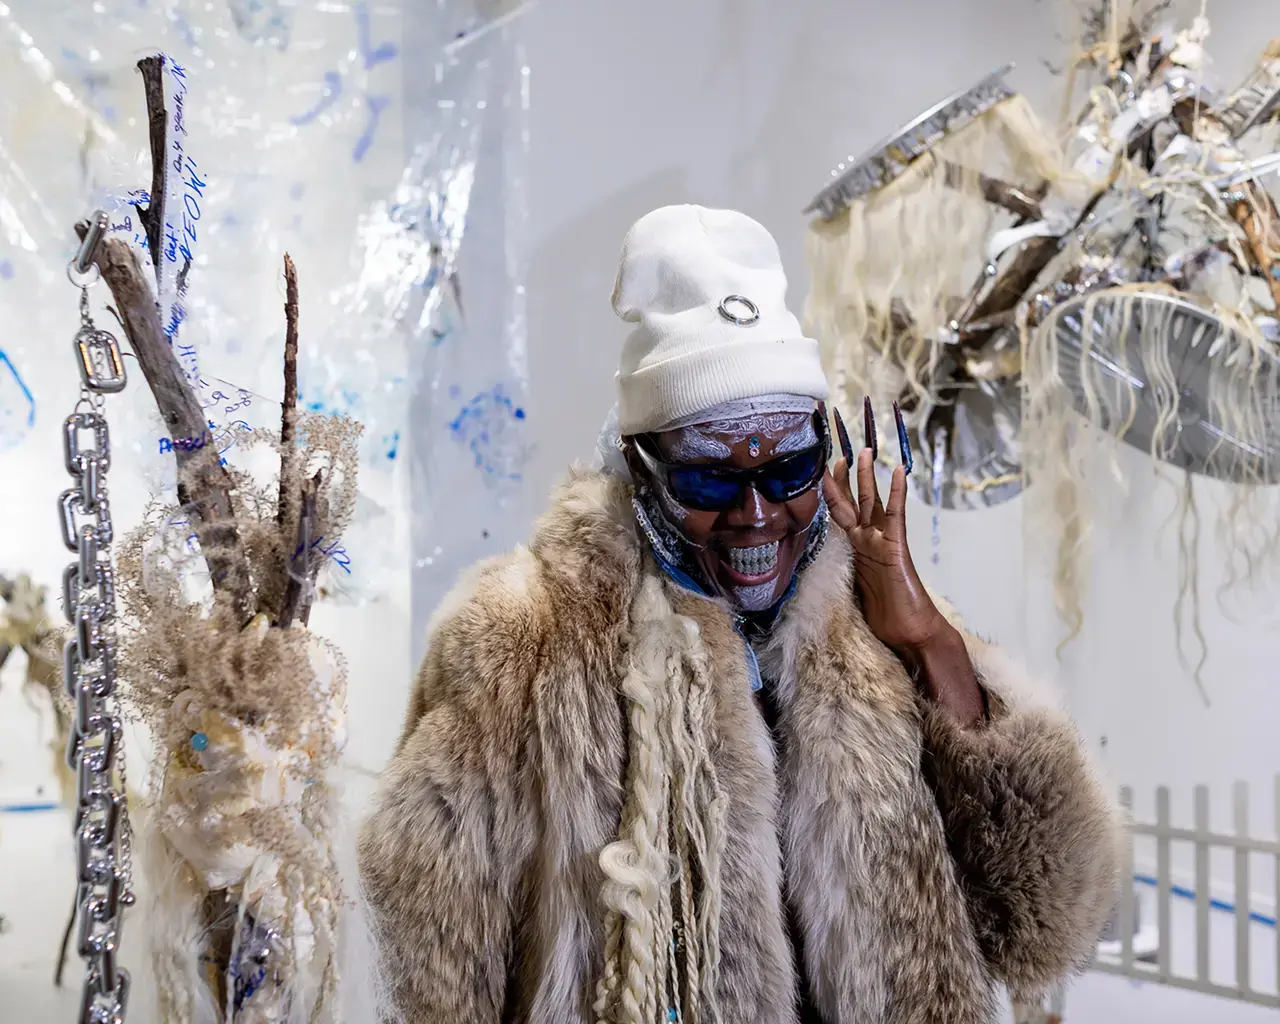 Vitche-Boul Ra wears a fur coat, white hat, sunglasses, a bejeweled grill, and long black fingernails.